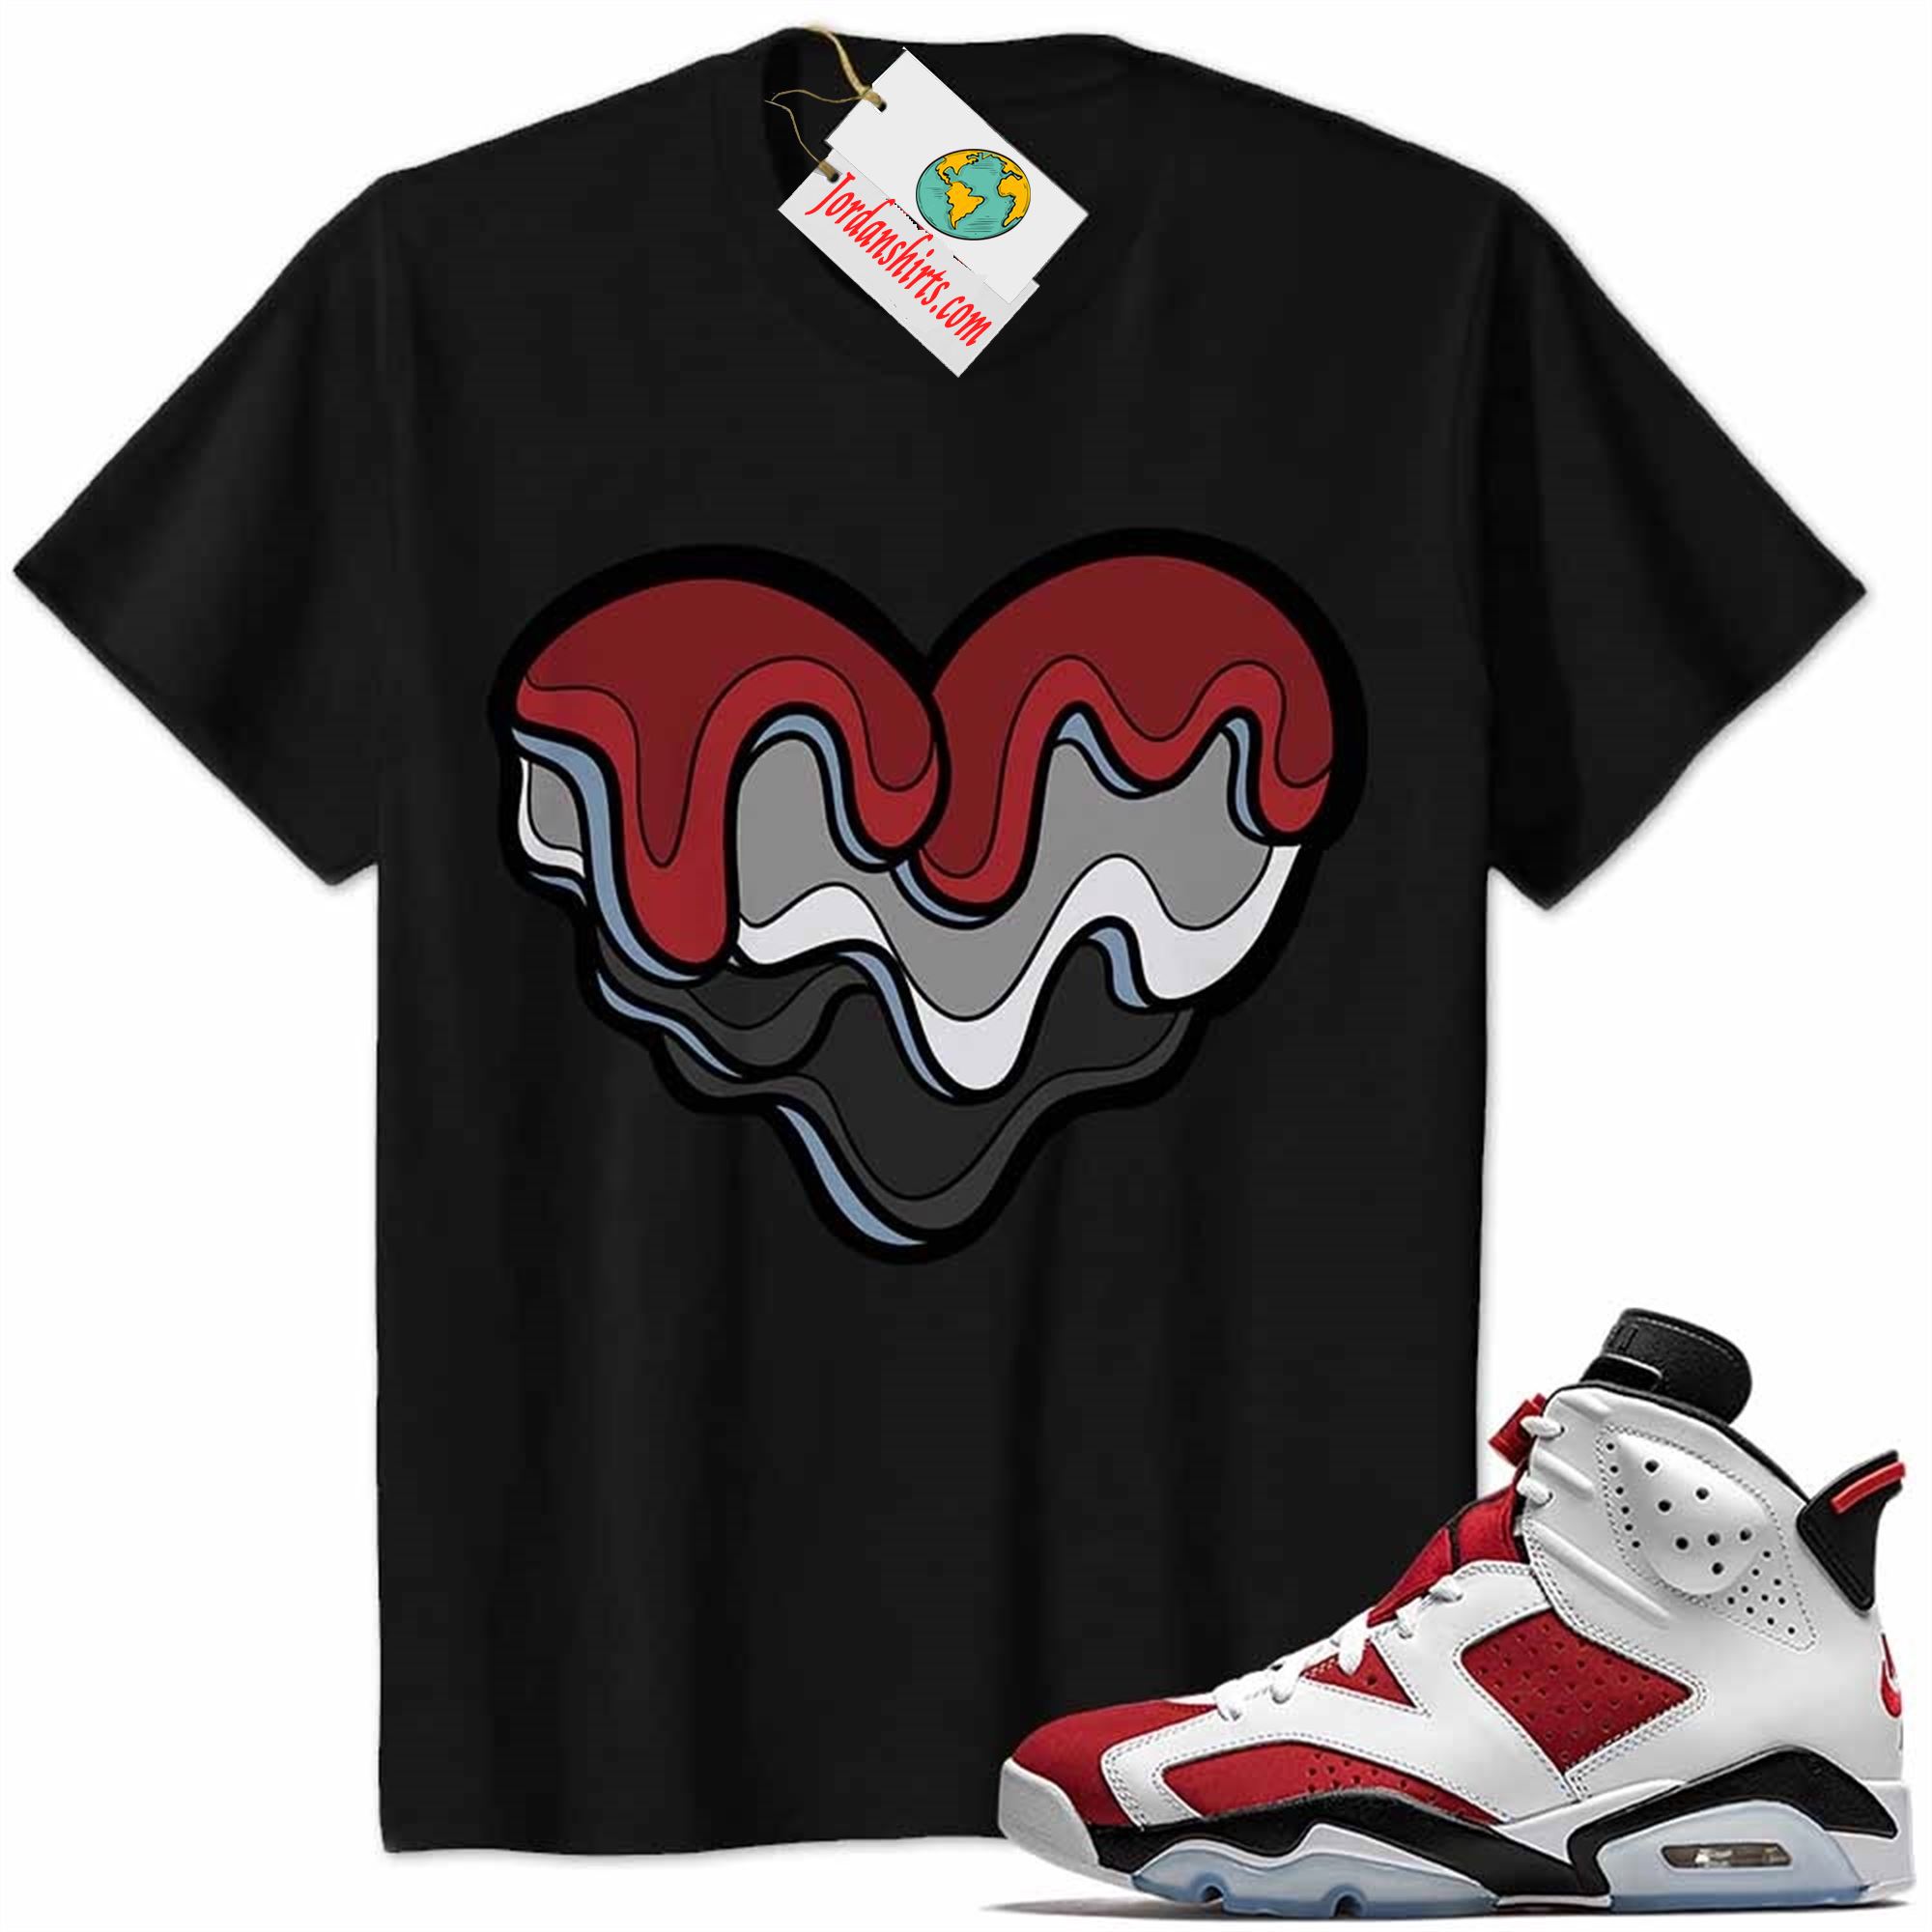 Jordan 6 Shirt, Melt Dripping Heart Black Air Jordan 6 Carmine 6s Full Size Up To 5xl